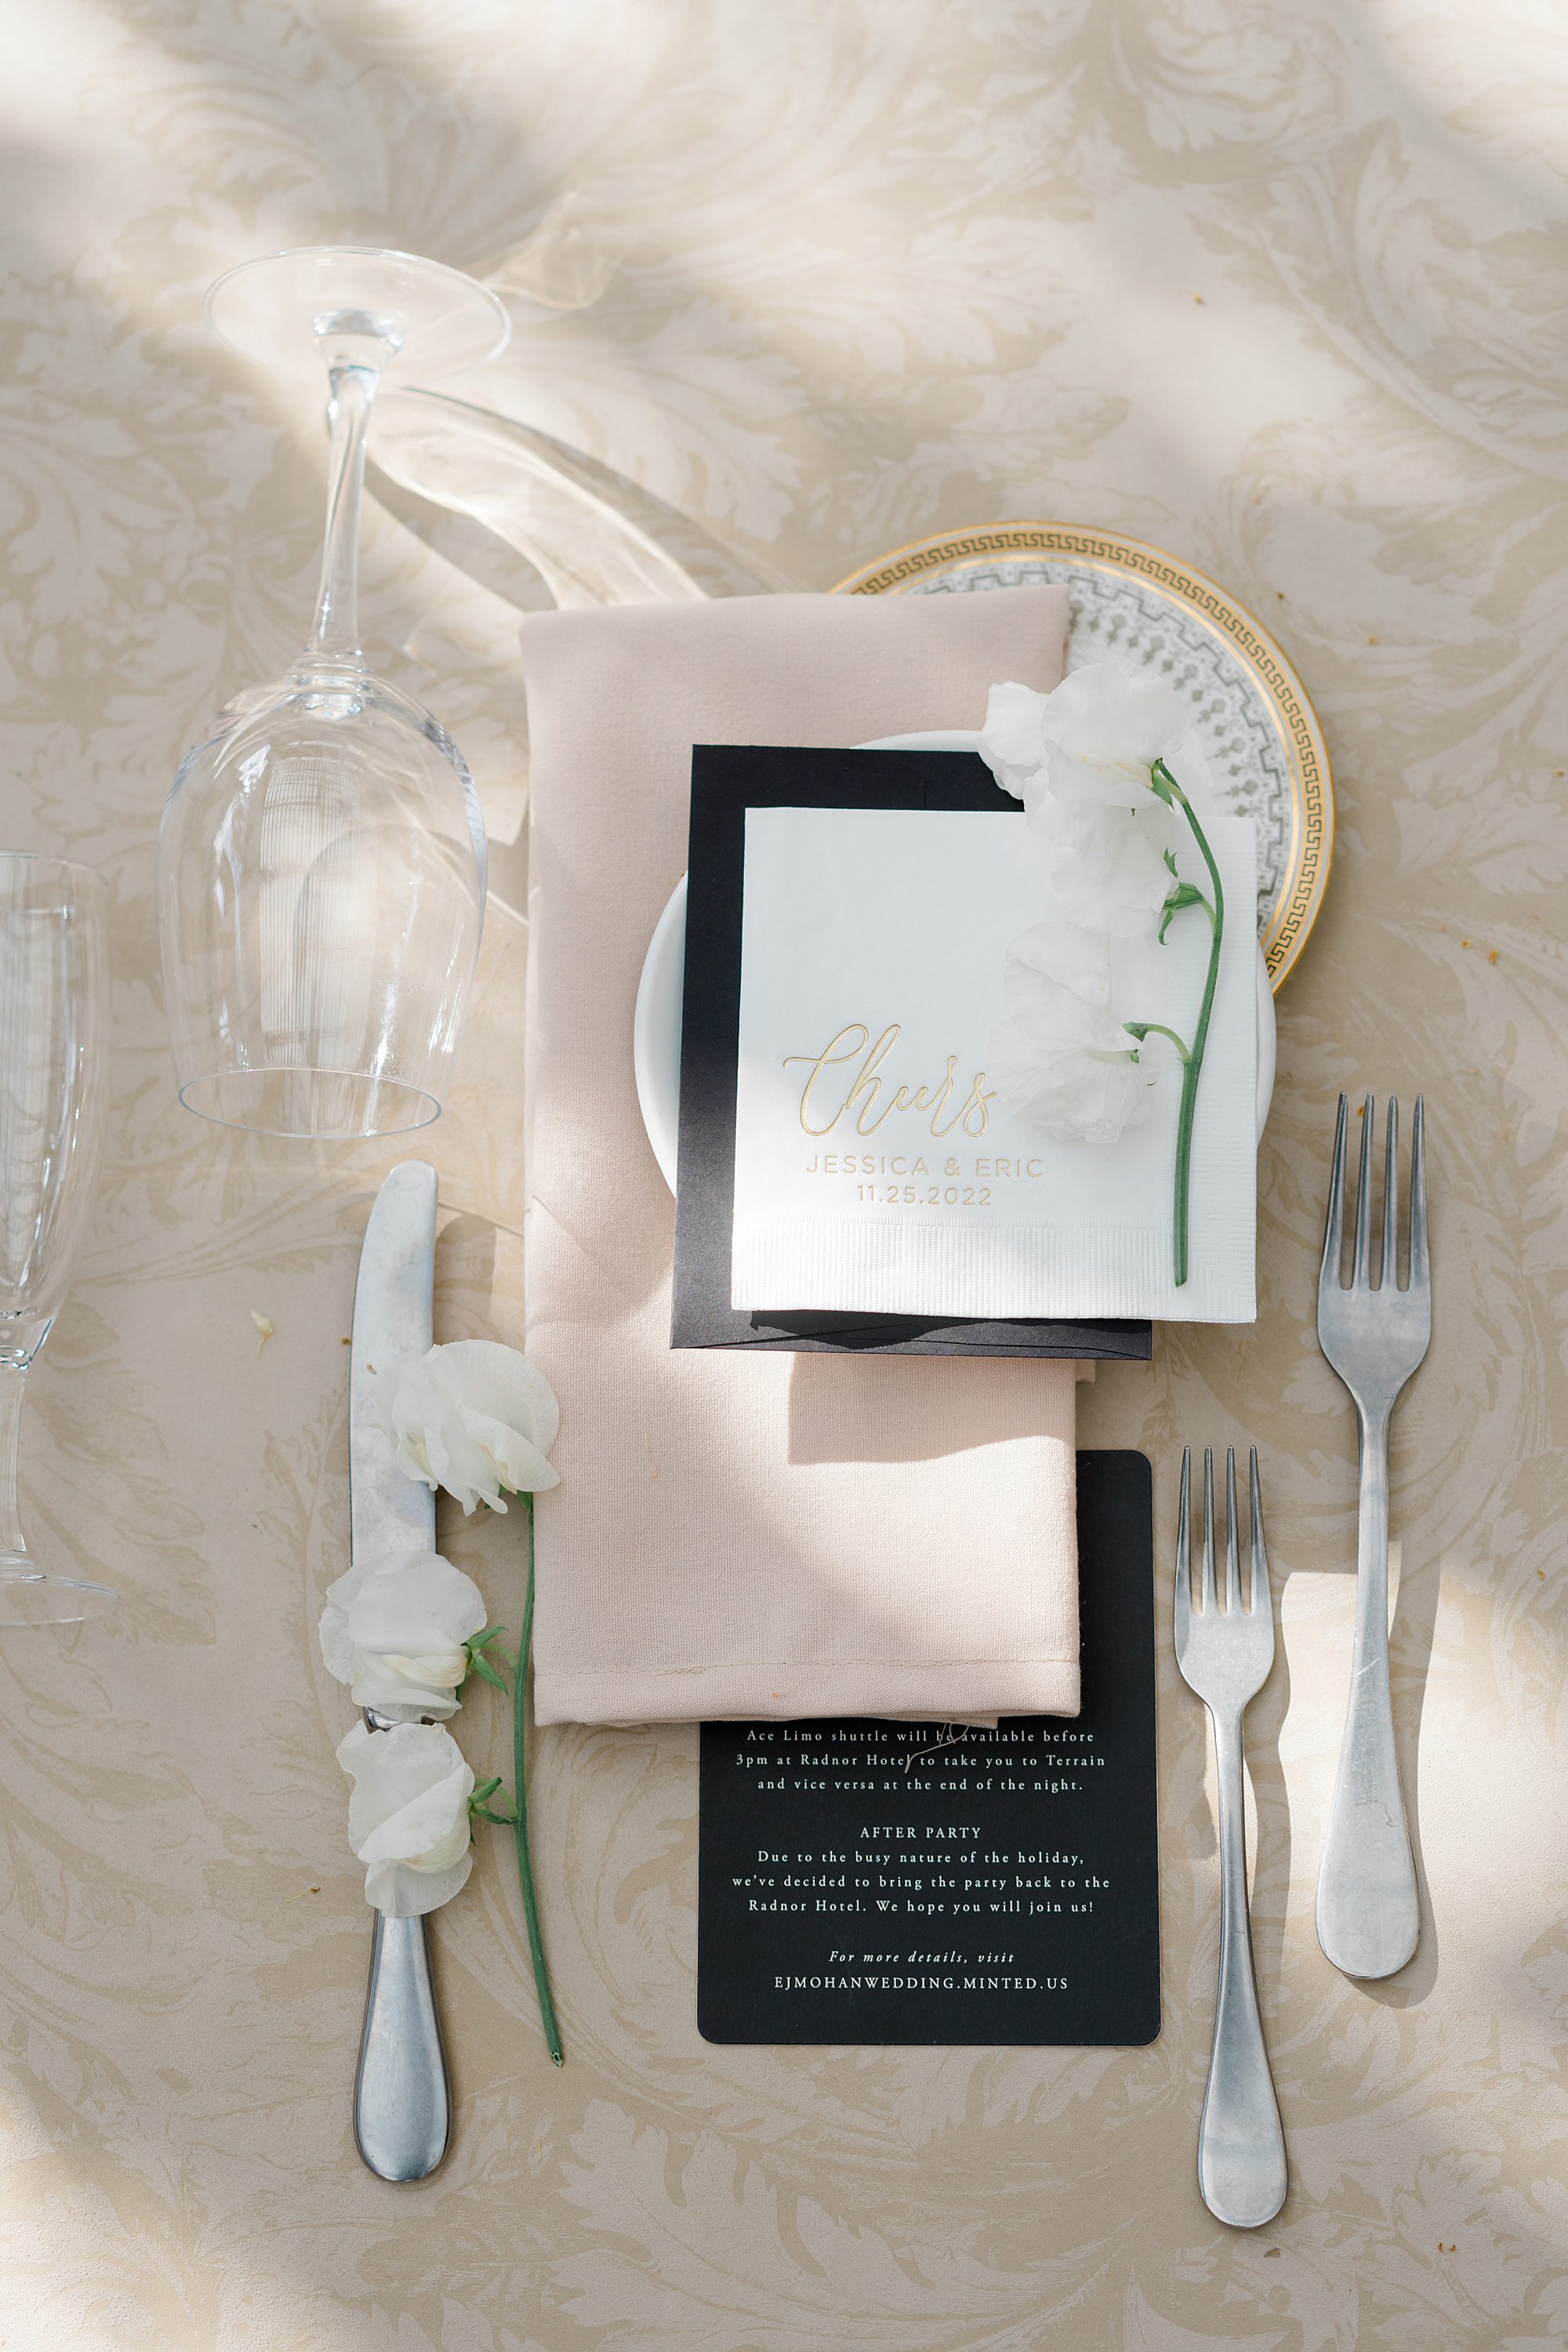 table setting from Terrain Gardens wedding